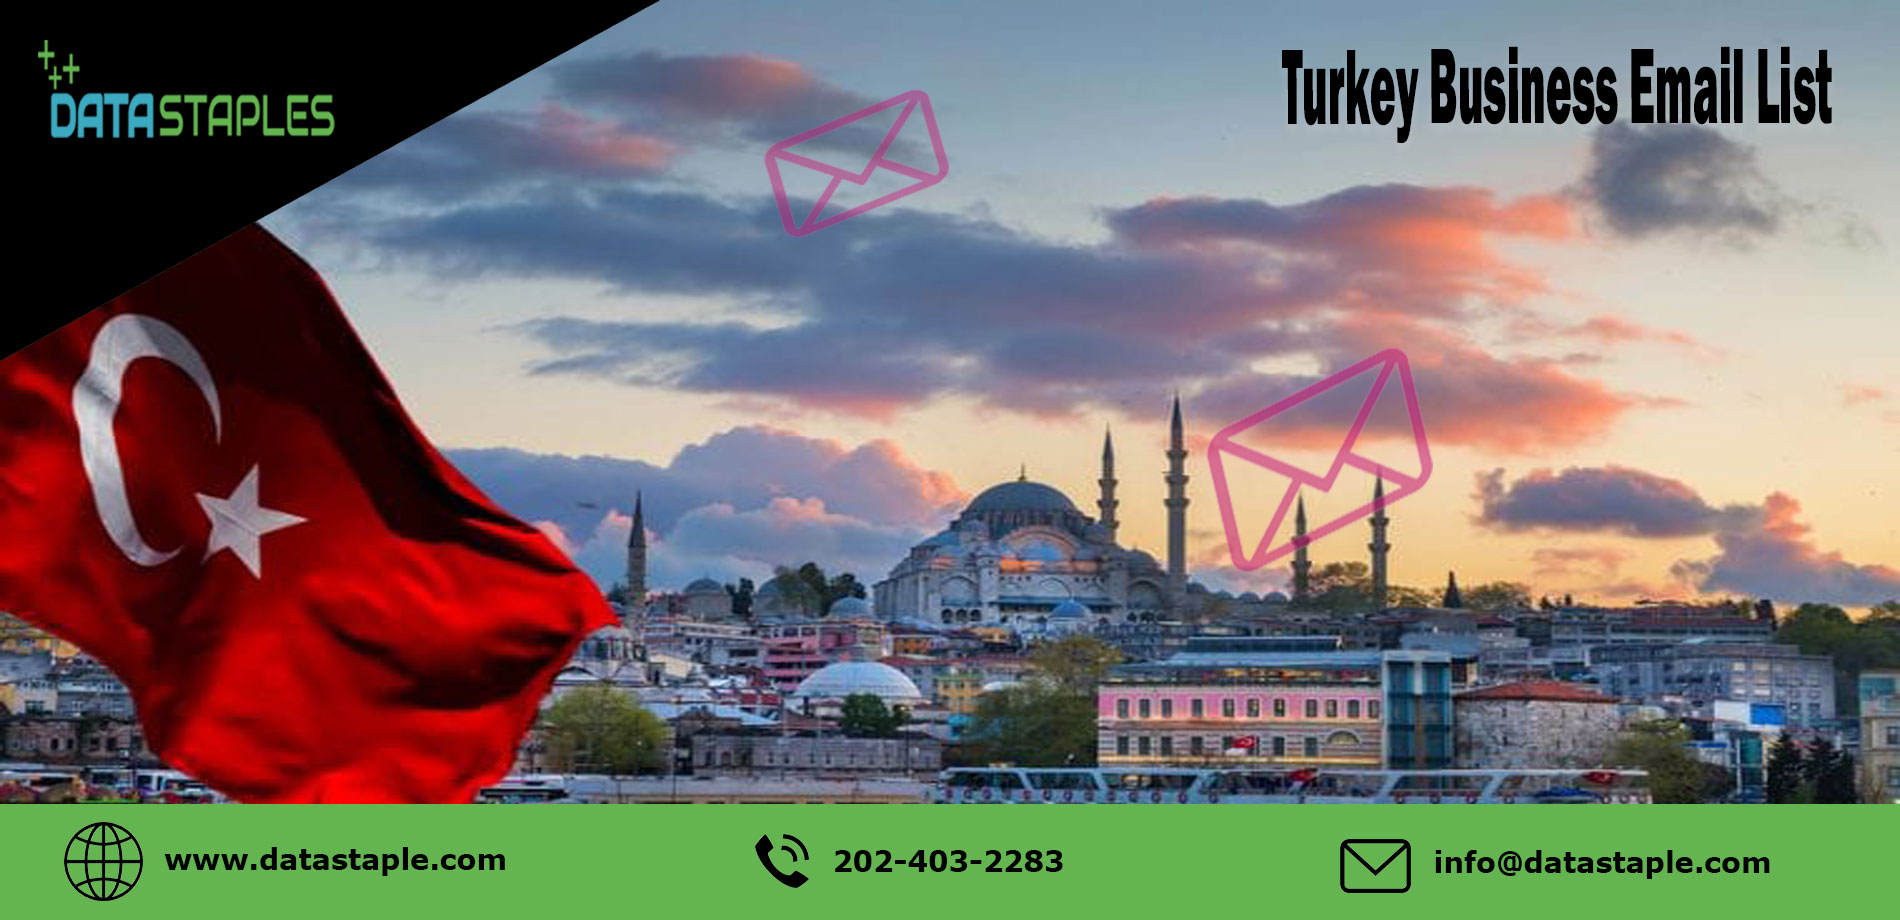 Turkey Business Email List | DataStaples